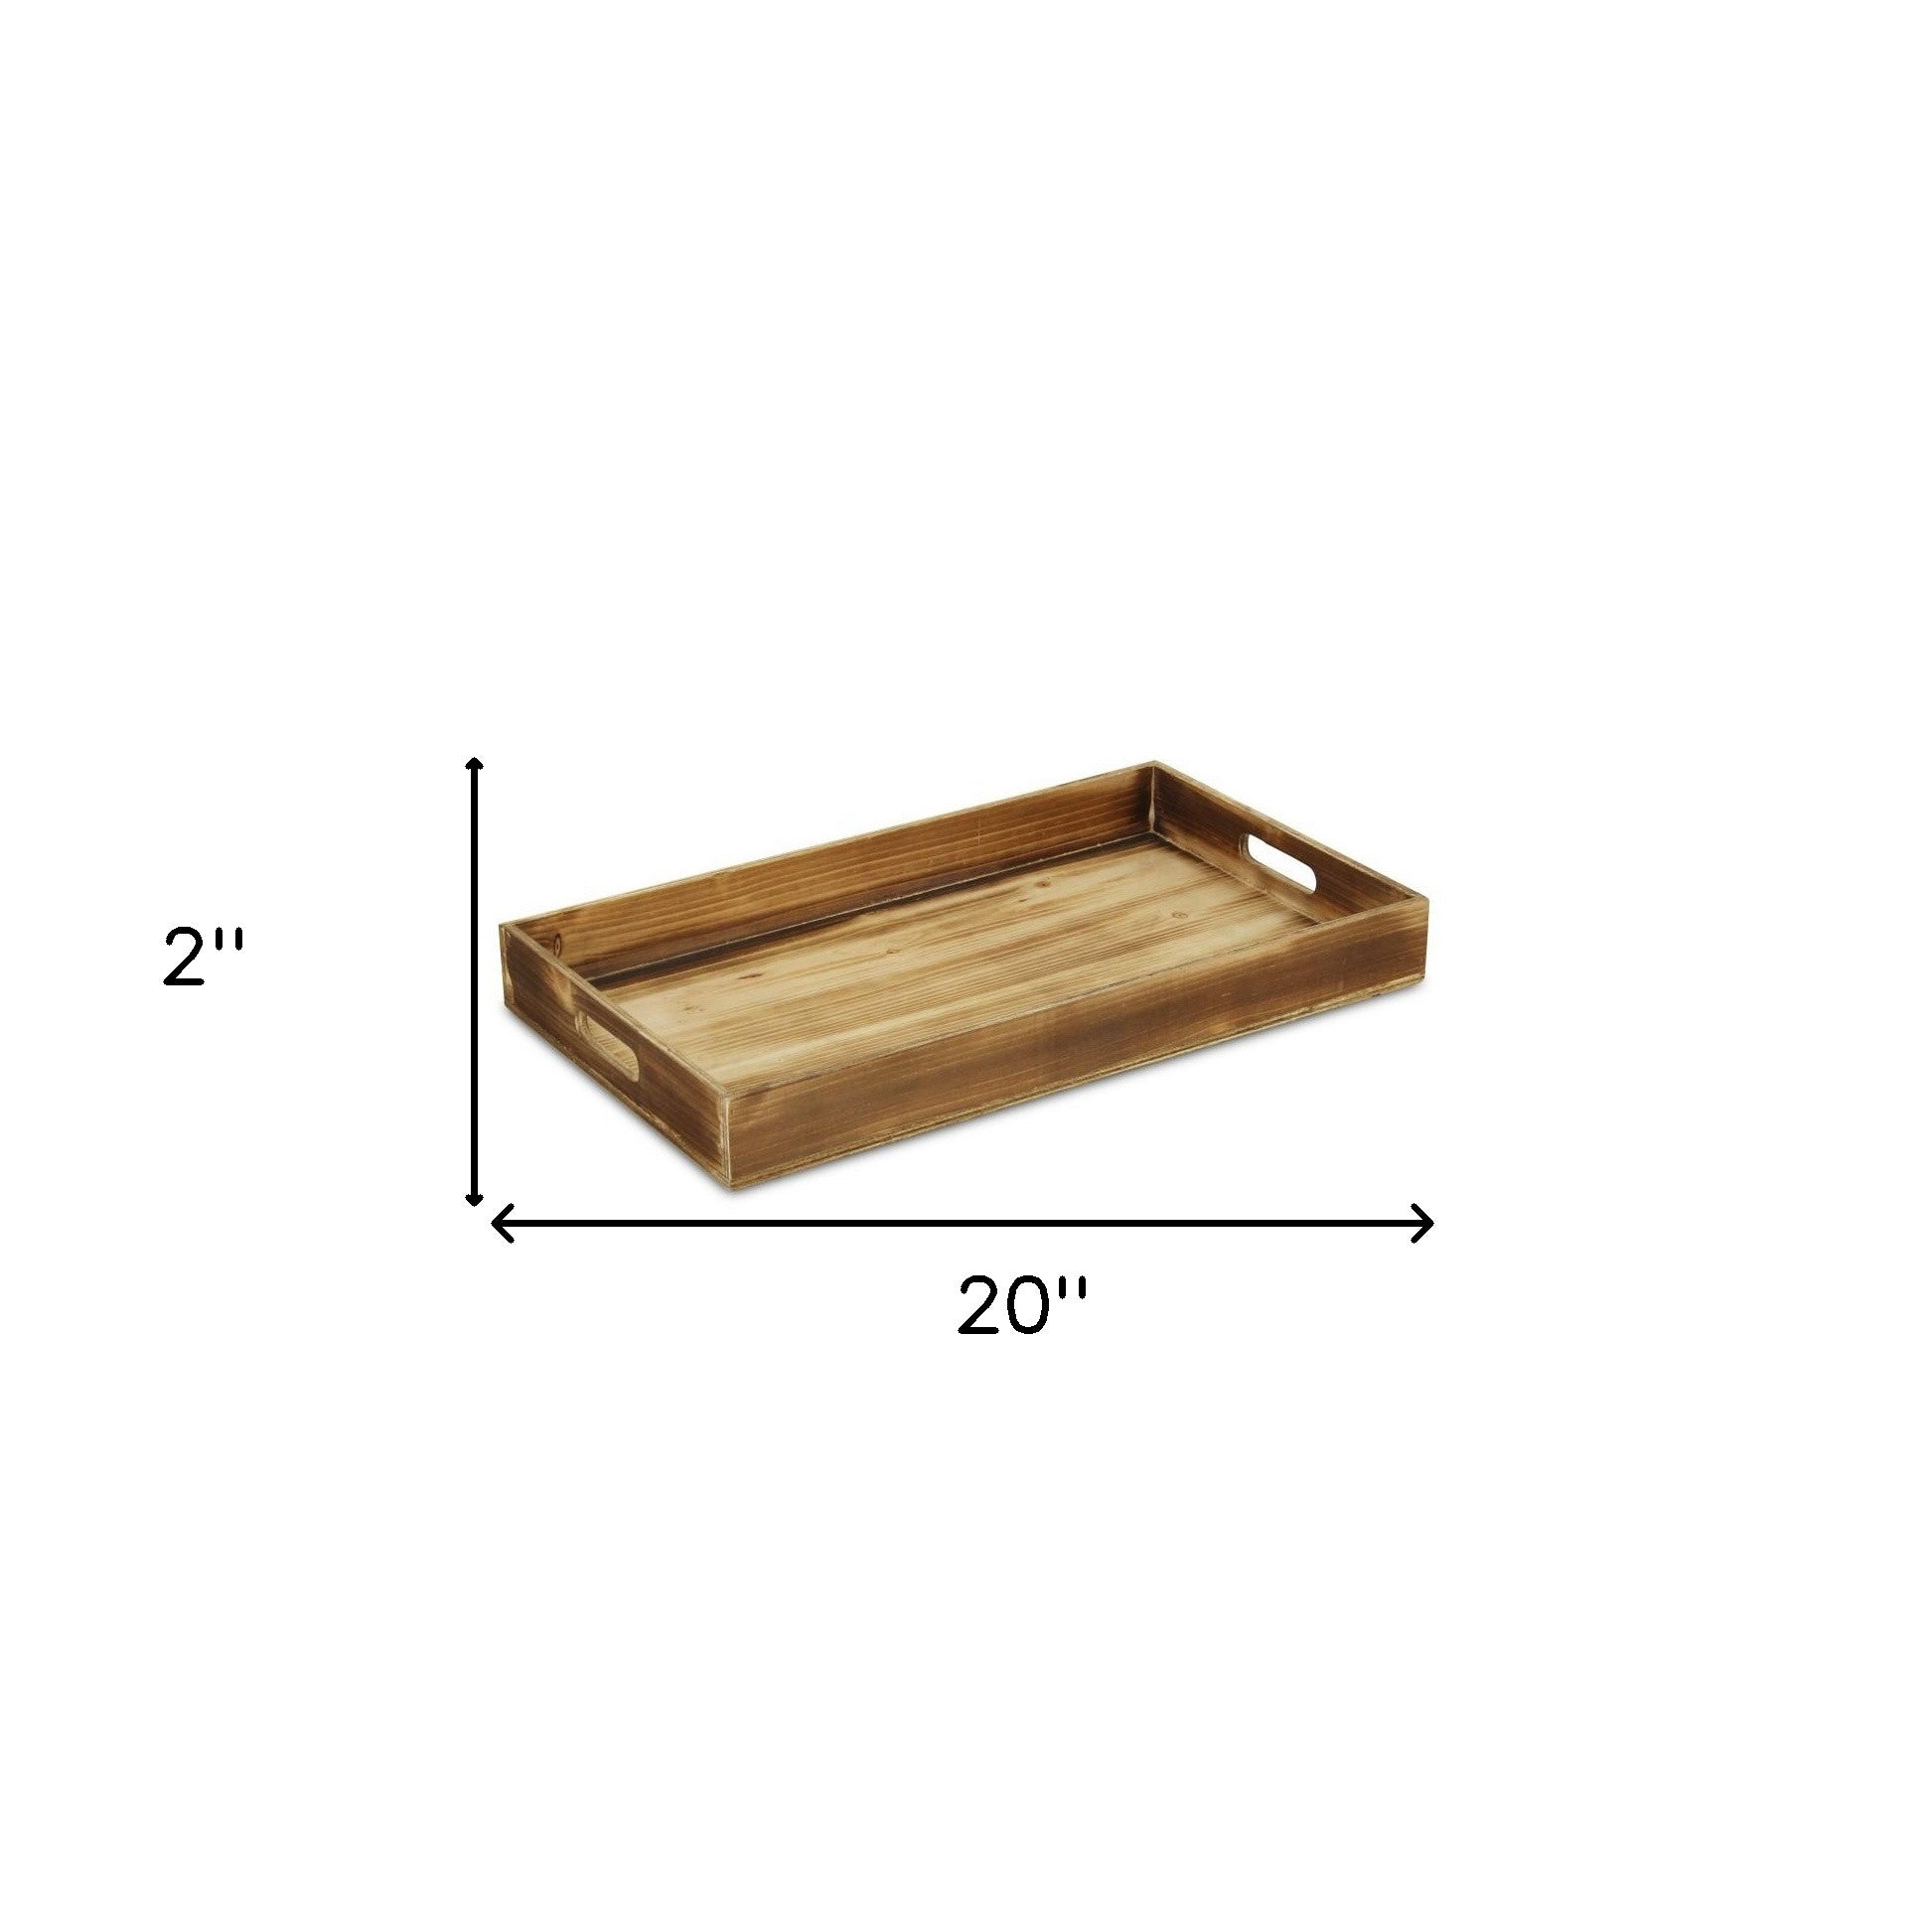 20" Brown Minimalist Wooden Tray